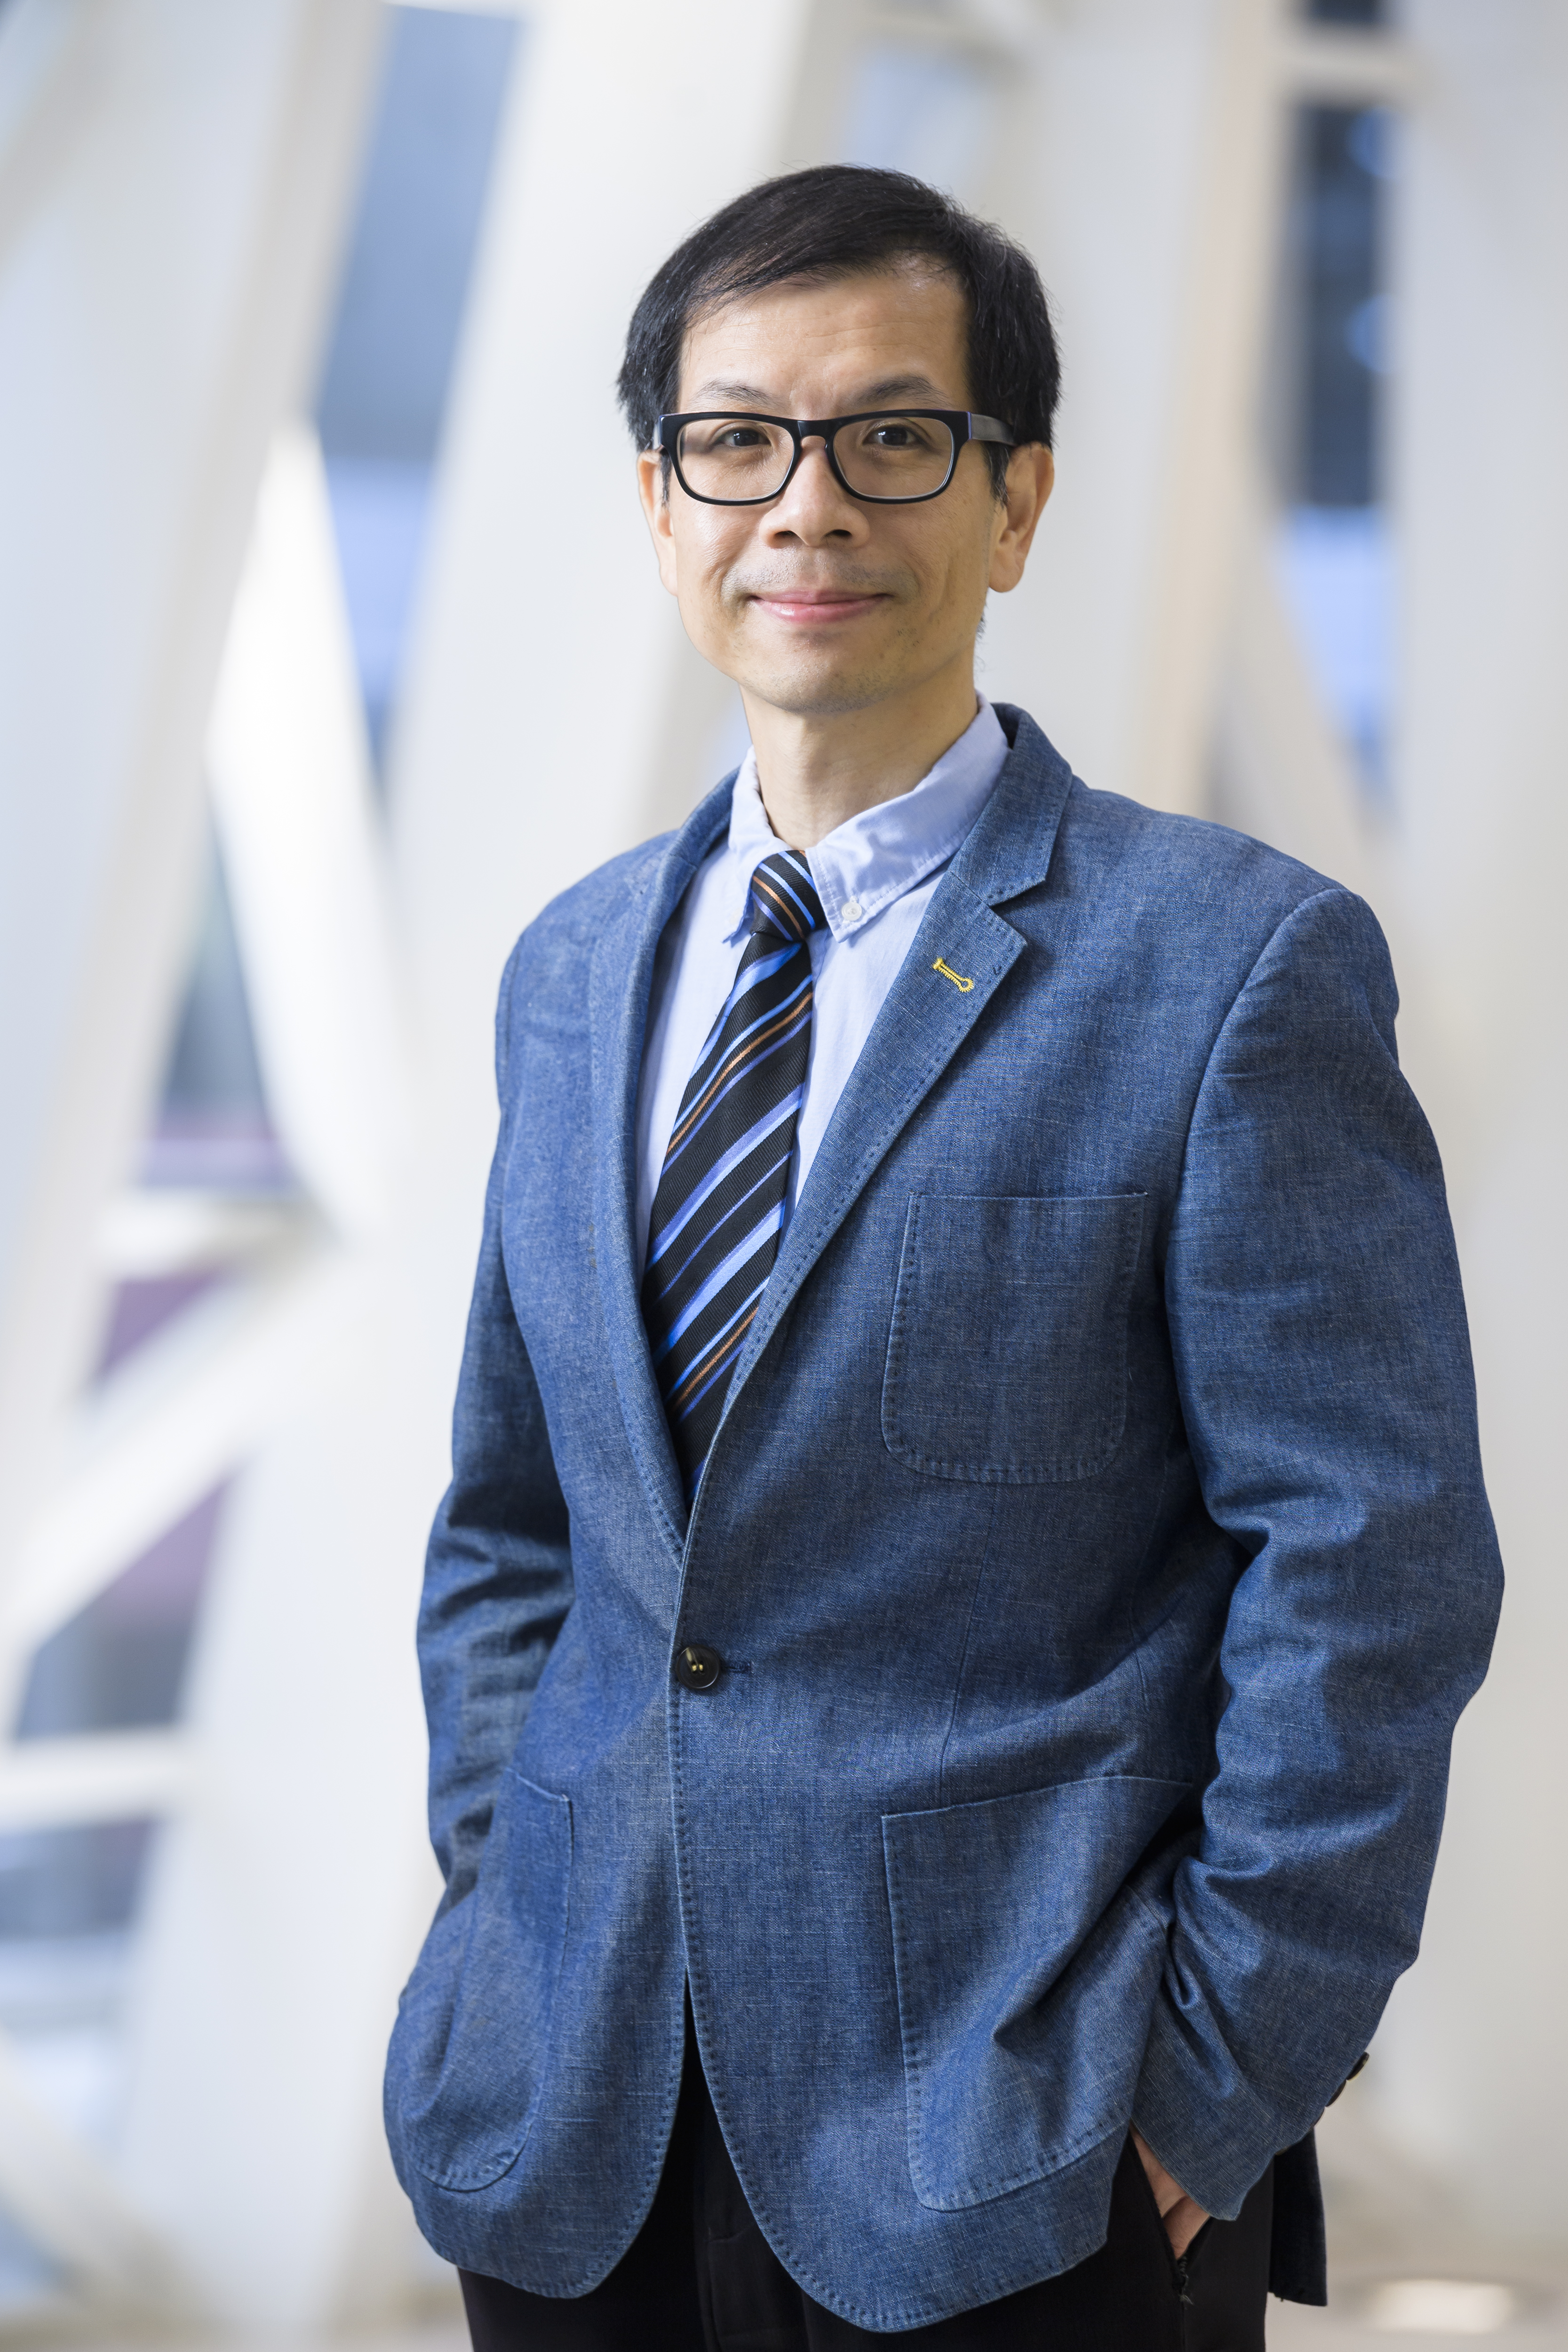 Professor Howard Leung